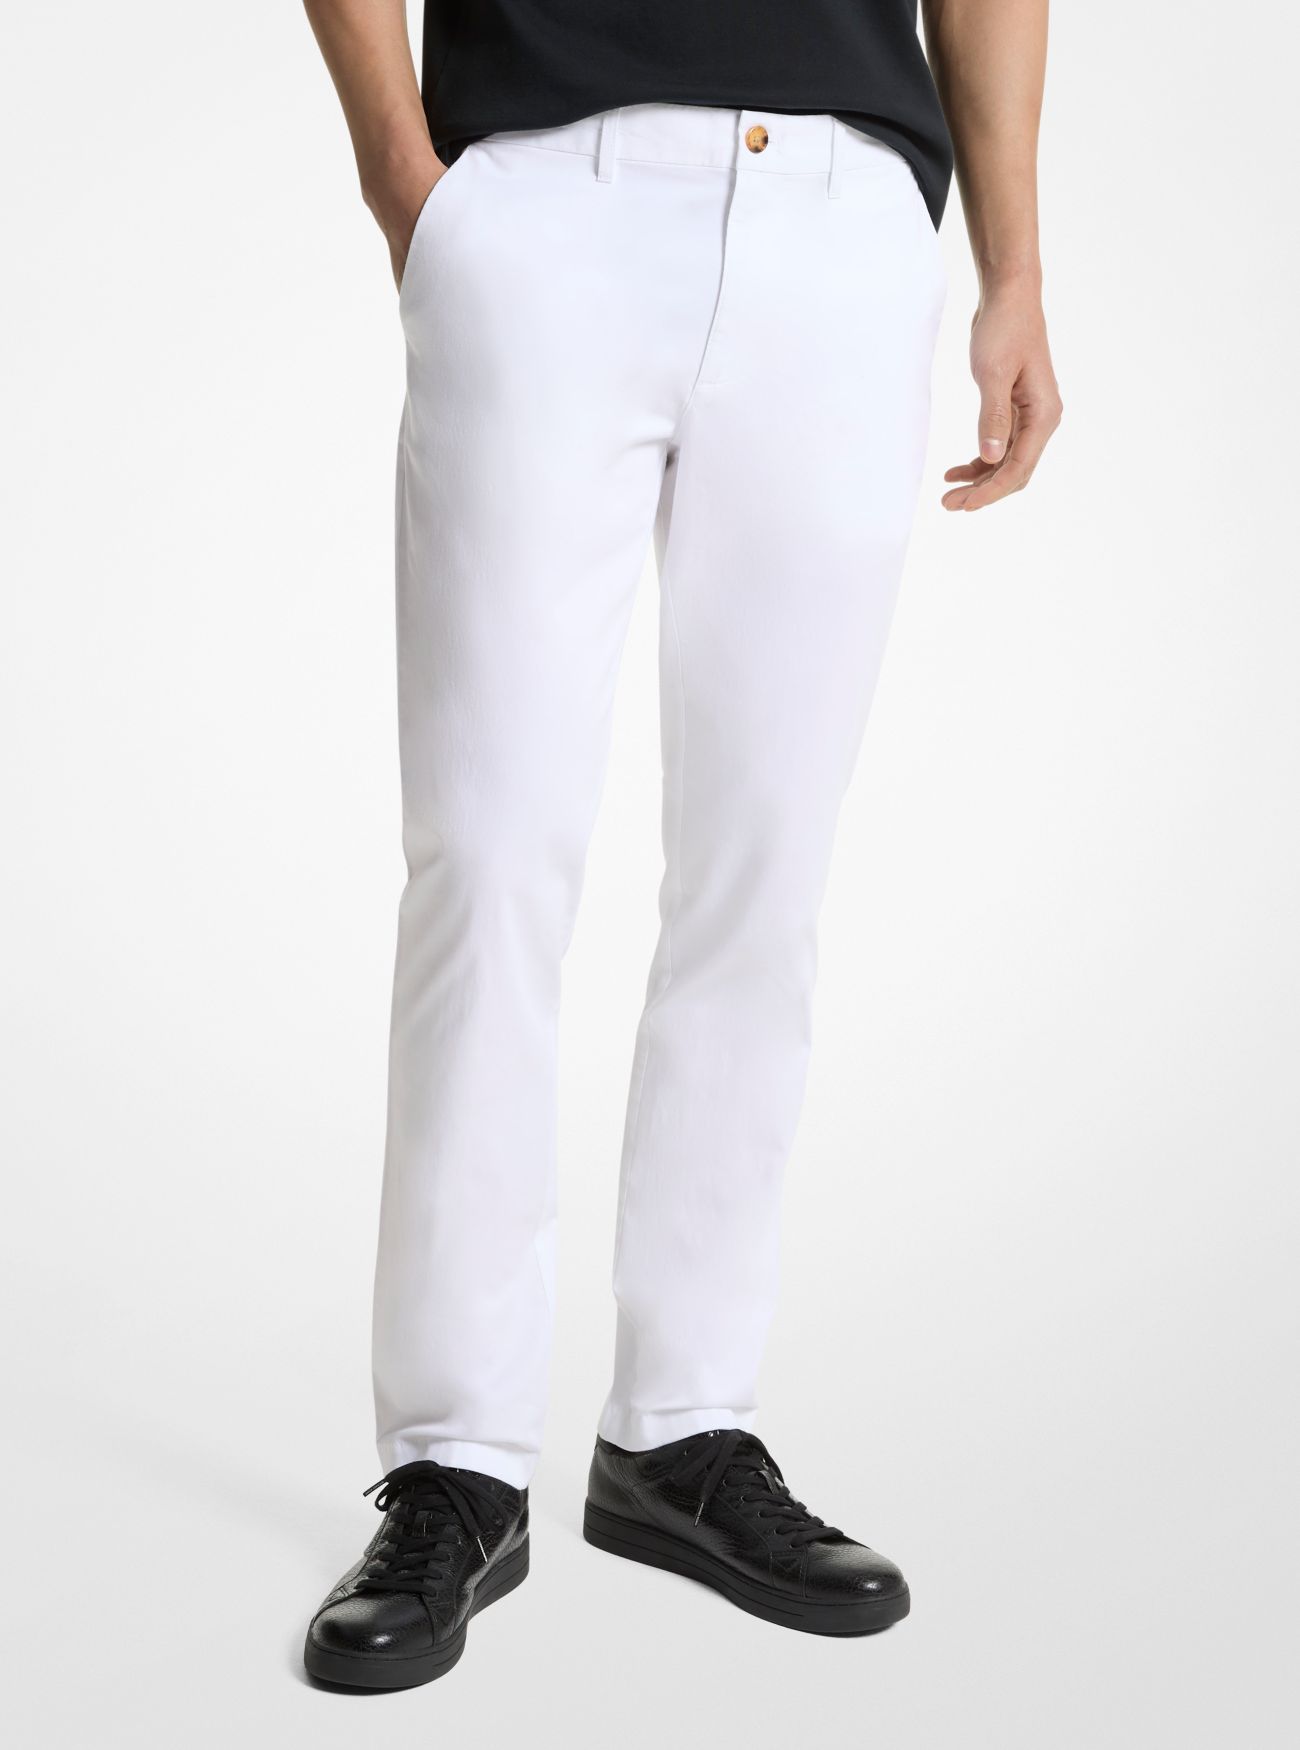 MK Slim-Fit Cotton Blend Chino Trousers - White - Michael Kors